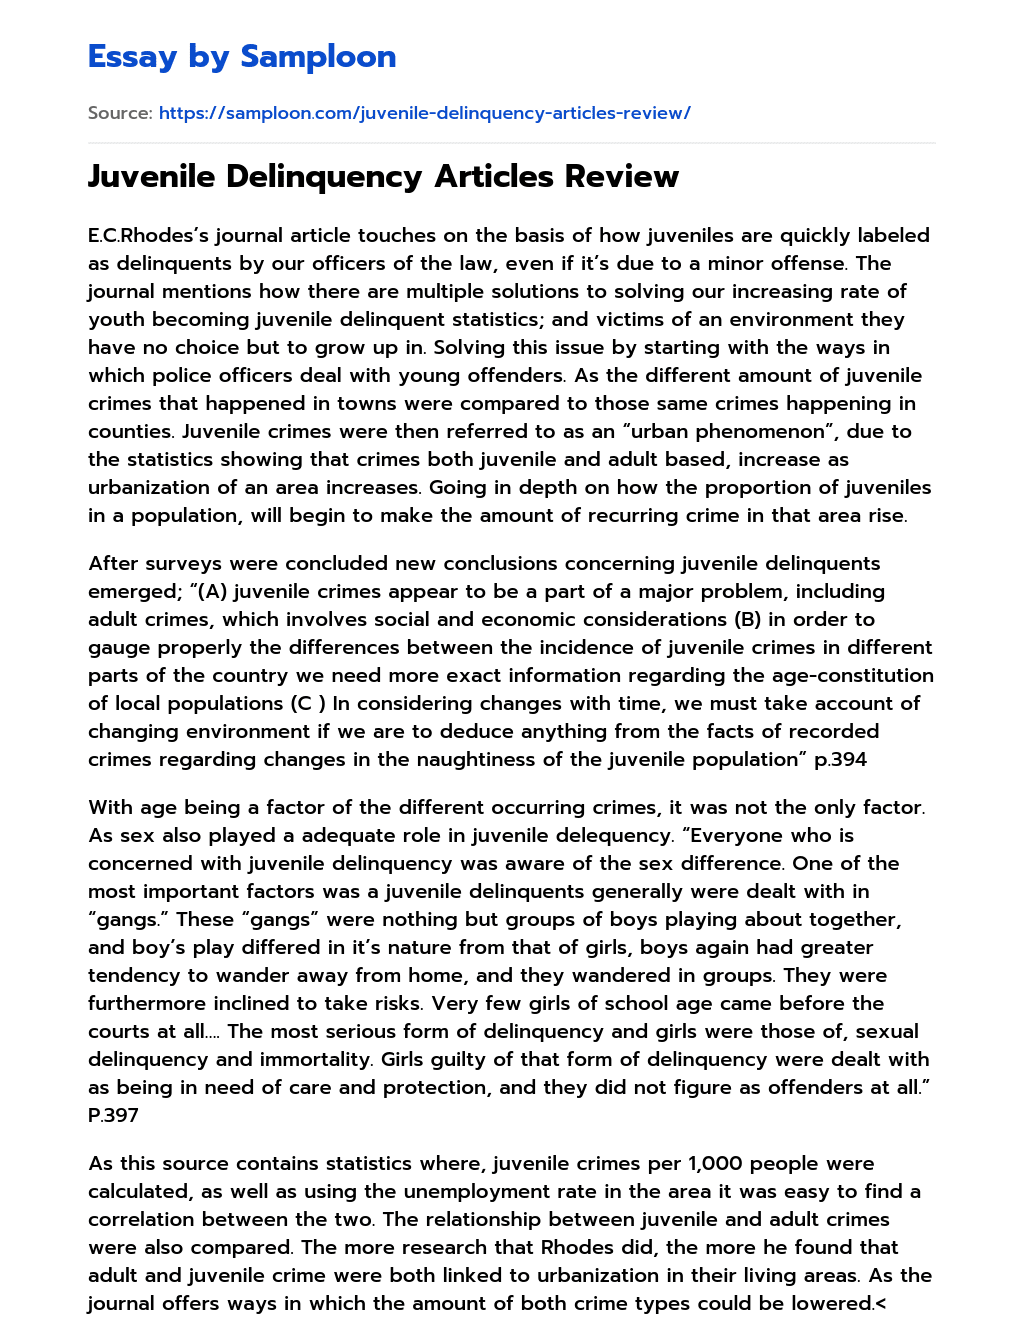 Juvenile Delinquency Articles Review essay